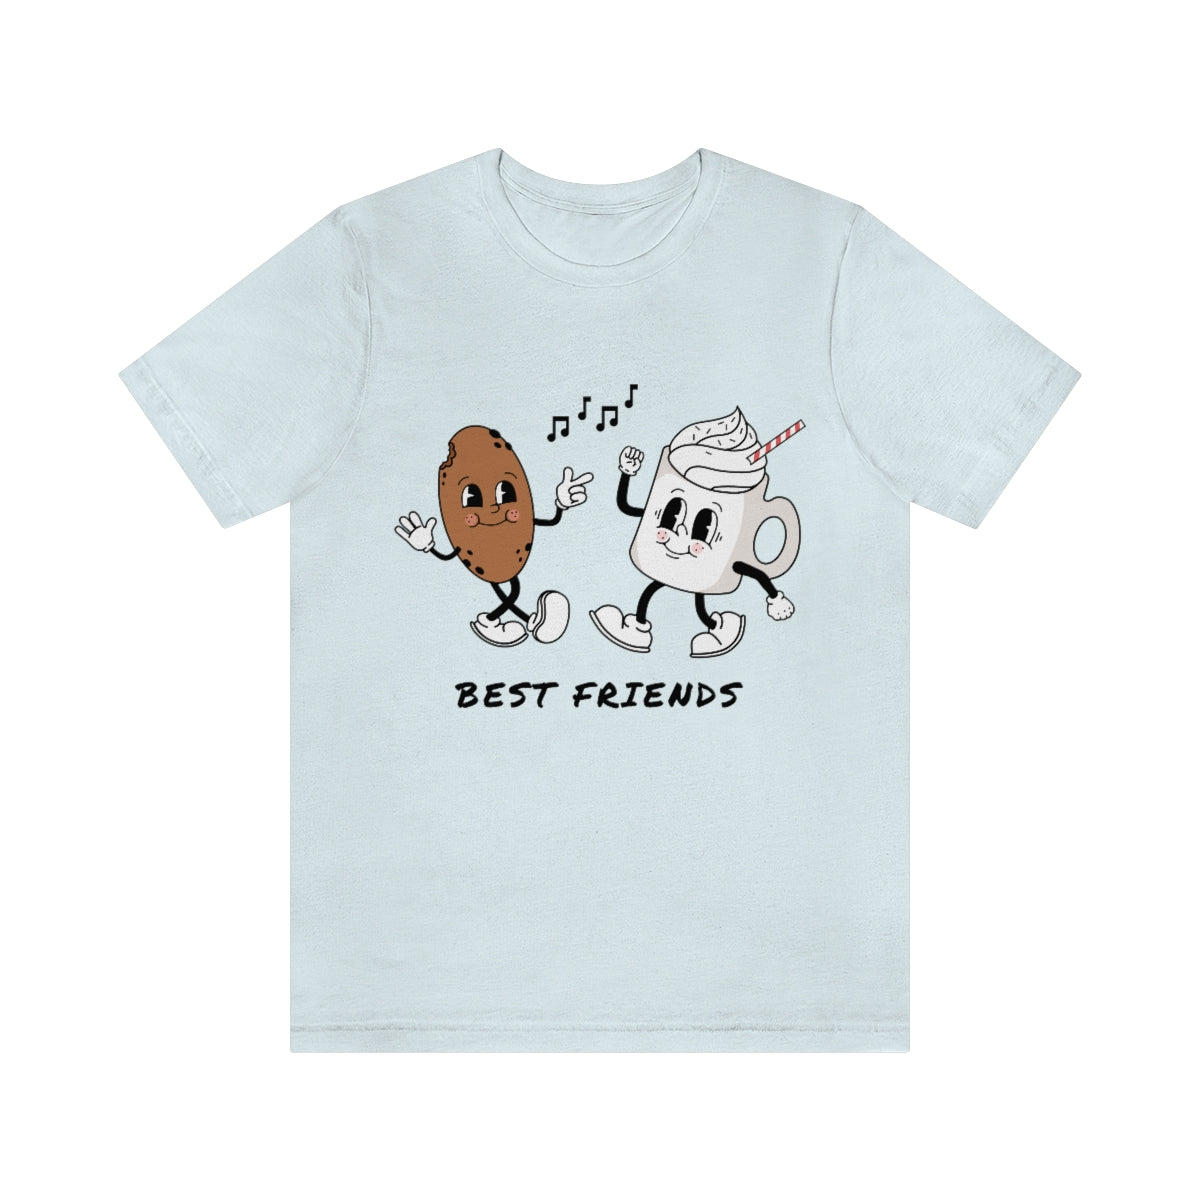 Best friends - Funny Unisex Short Sleeve Tee - CrazyTomTShirts